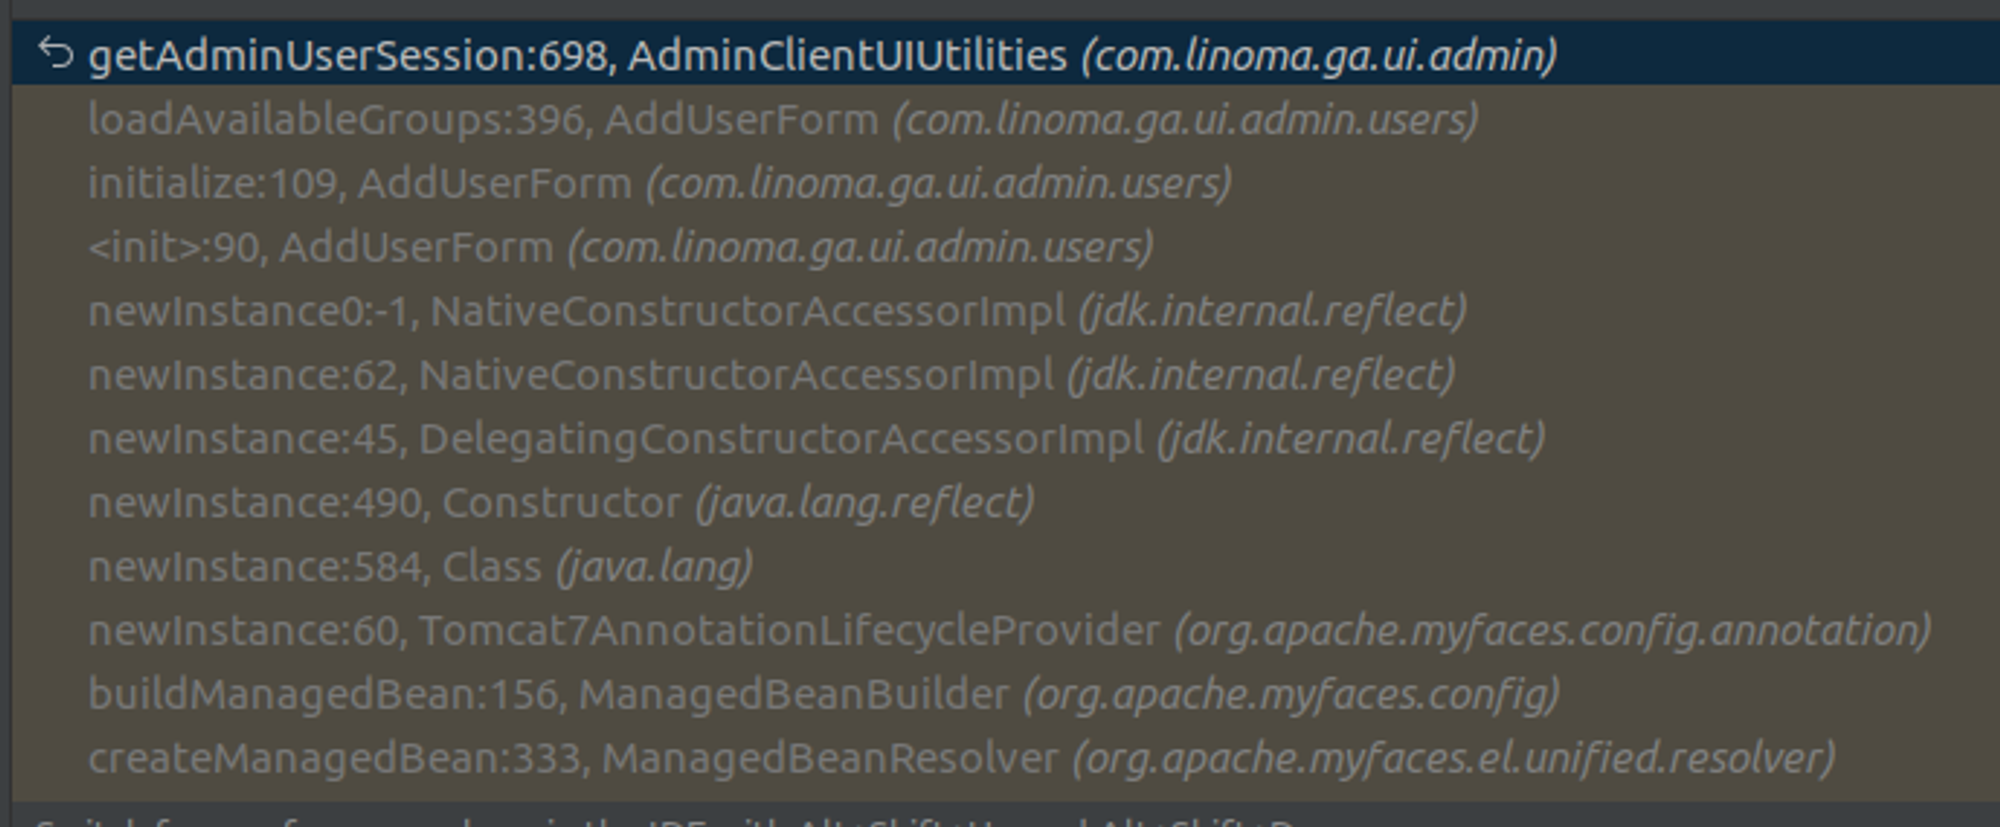 Broken access control in GoAnywhere Admin portal